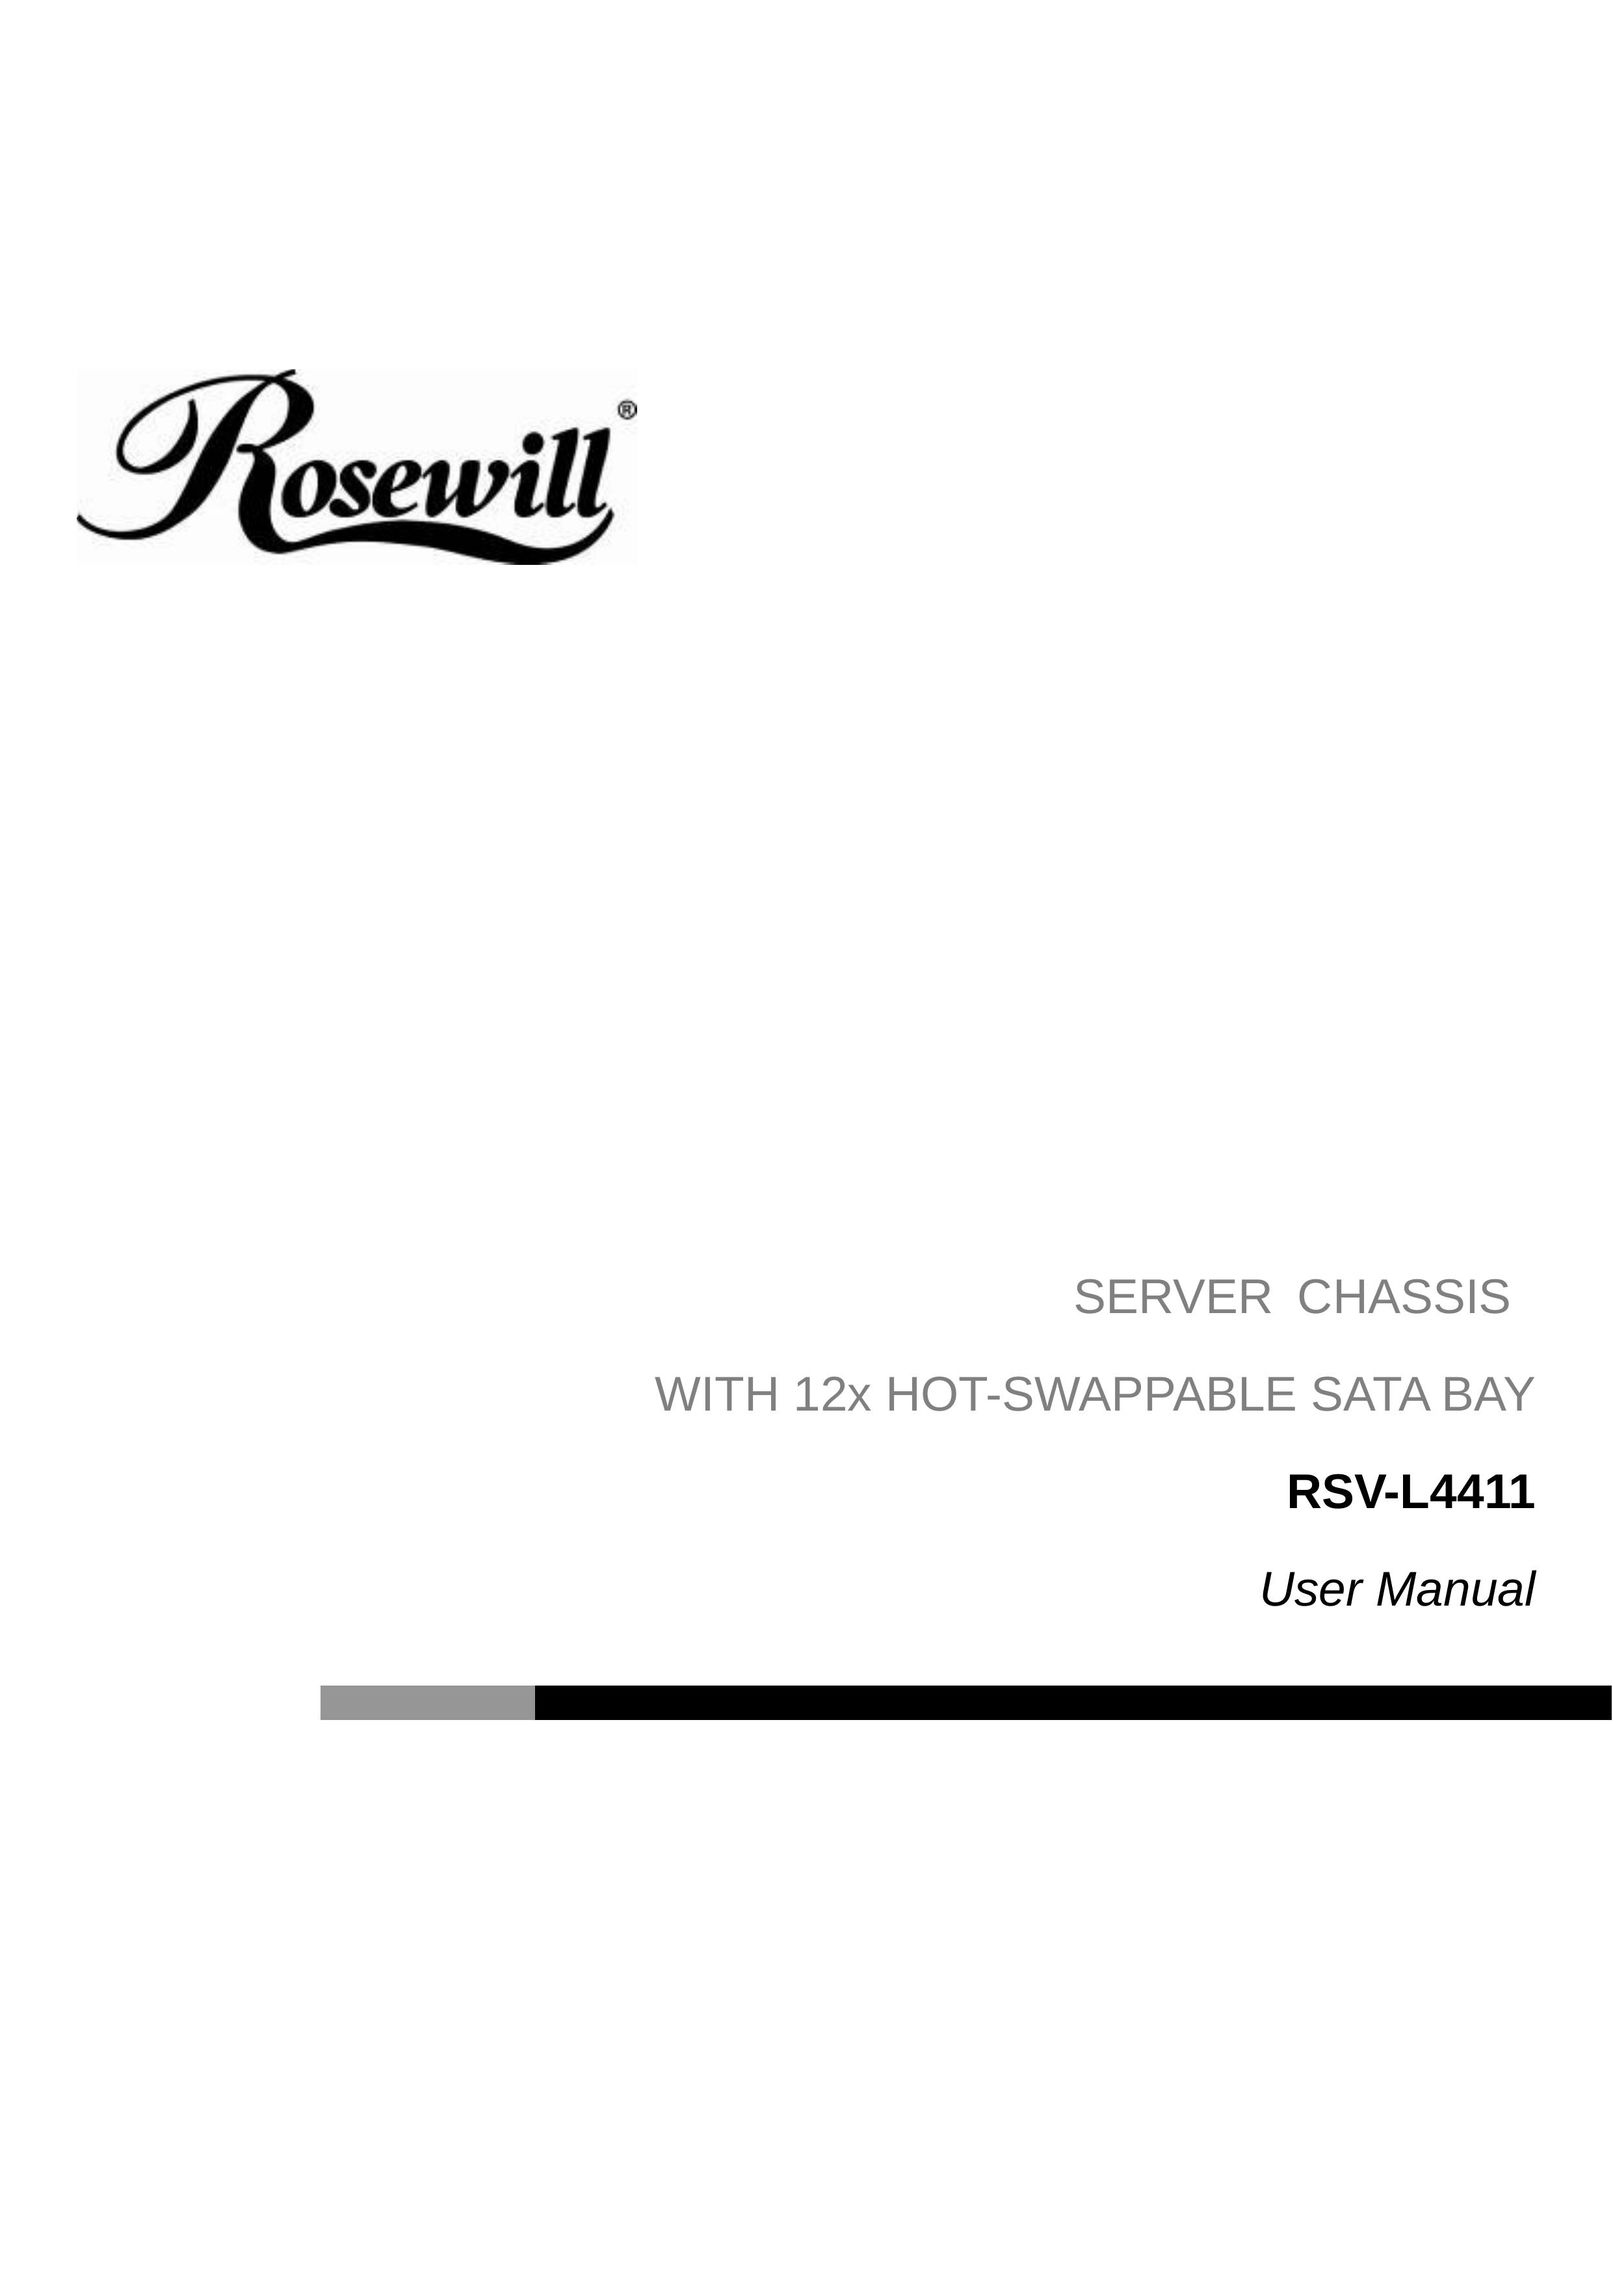 Rosewill RSV-L4411 Server User Manual